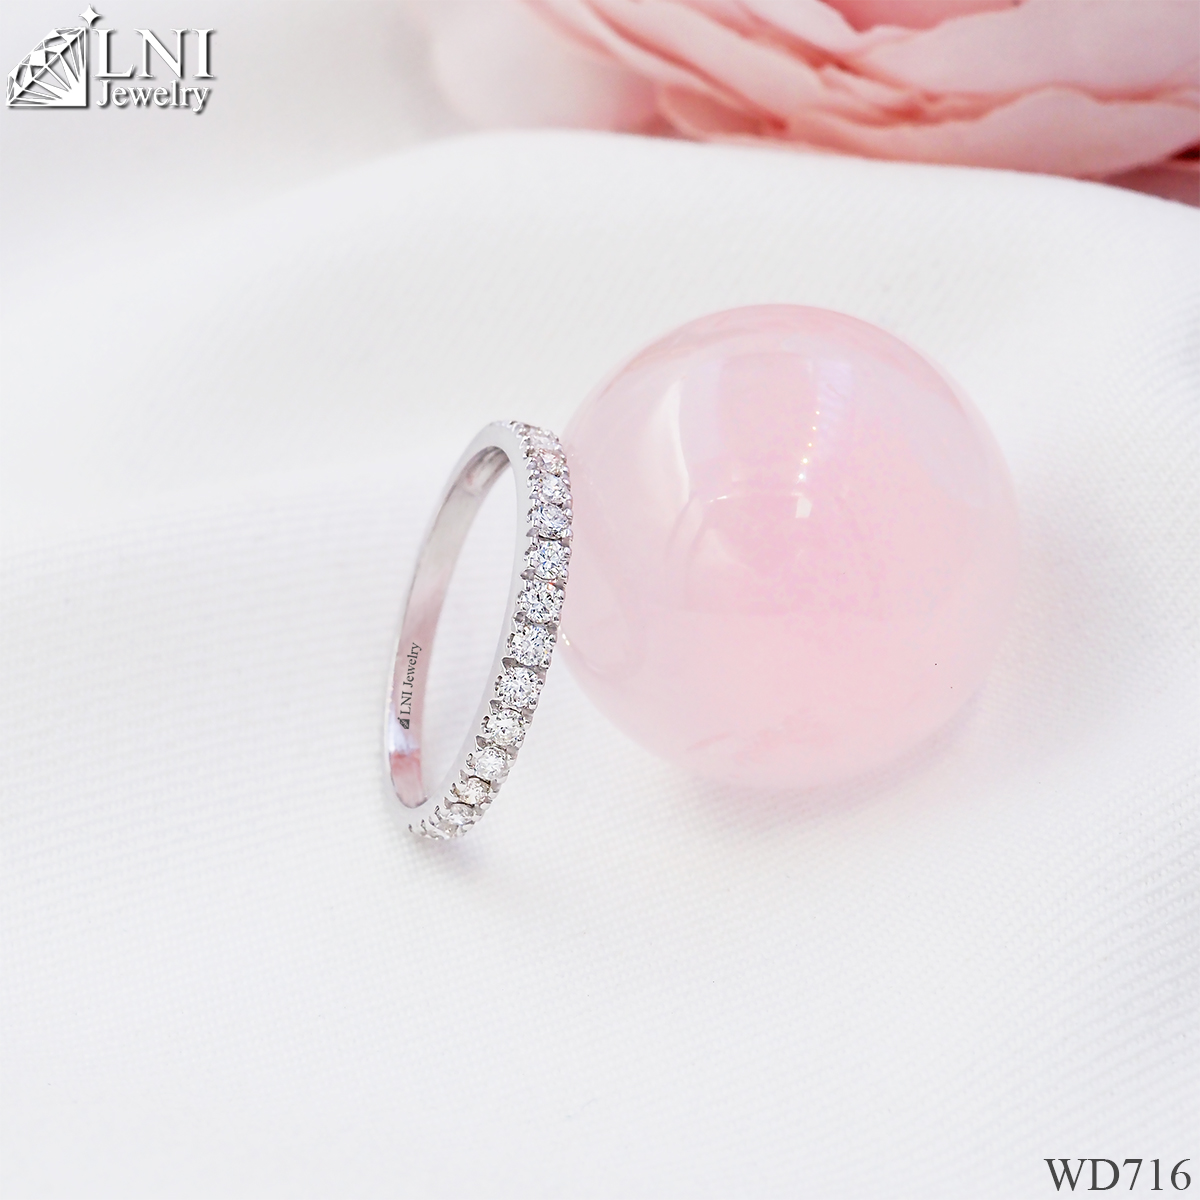 WD716 Band Diamond Ring